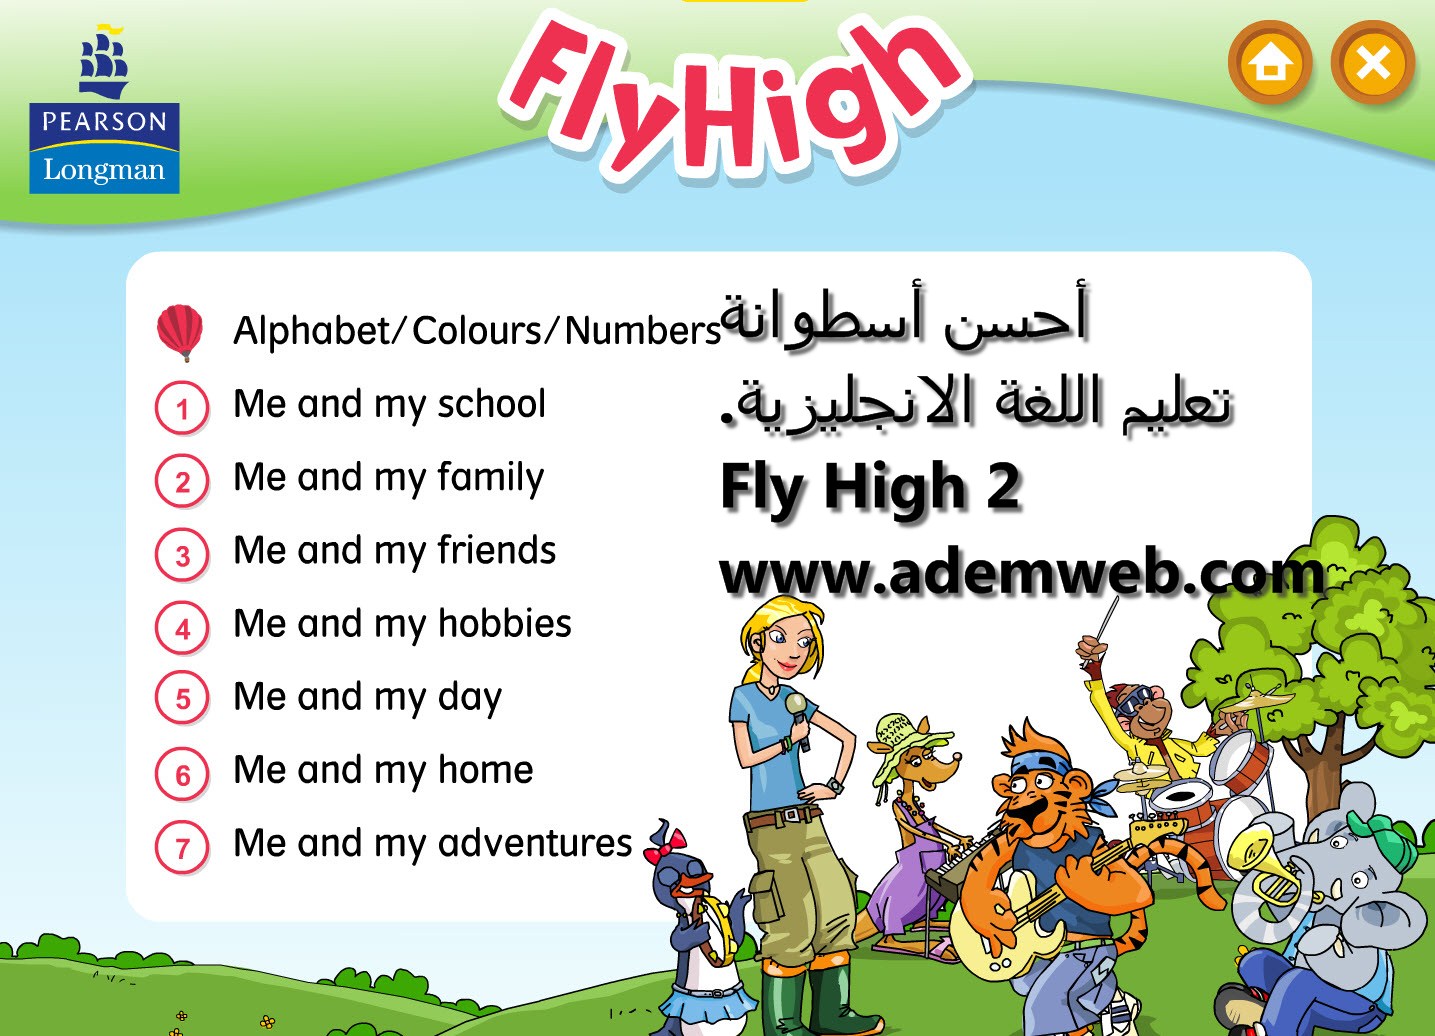 We fly high. Герои учебника Fly High 2. Предлоги Fly High 2. Alphabet Fly High 2.